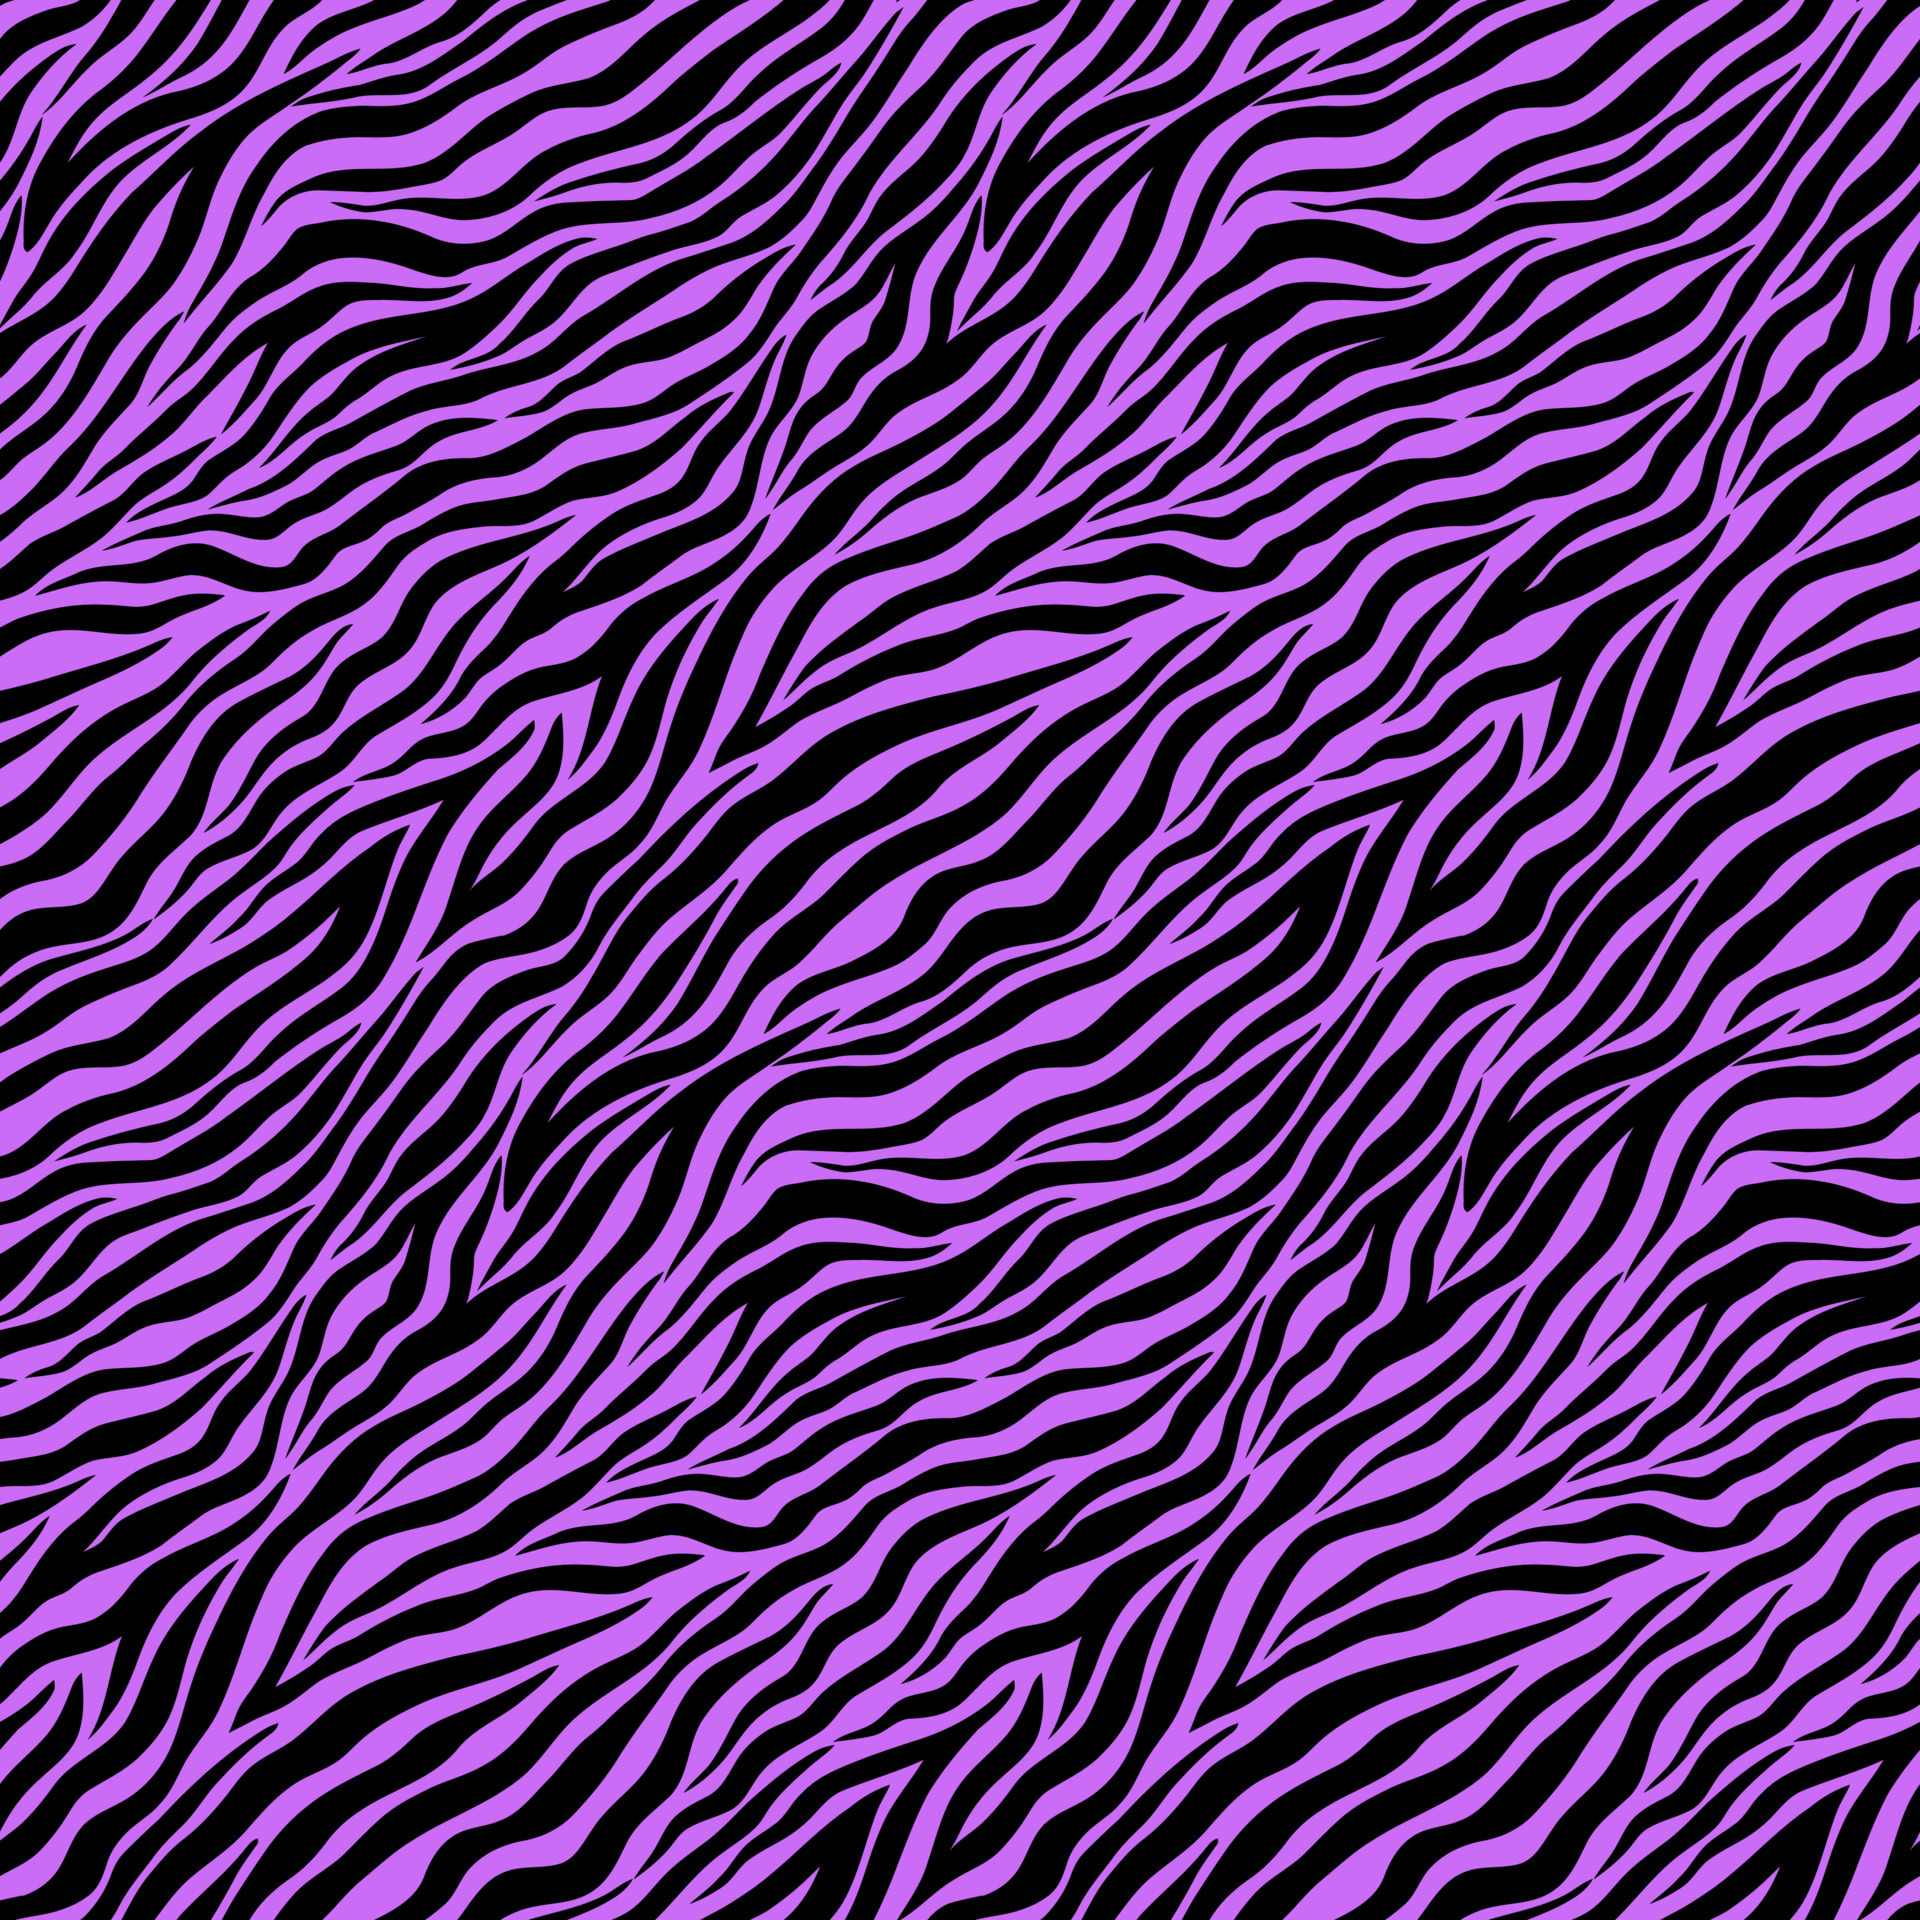 https://static.vecteezy.com/system/resources/previews/007/919/855/original/purple-zebra-animal-motif-seamless-pattern-vector.jpg